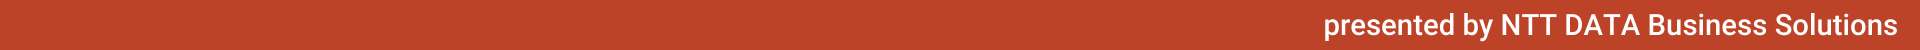 TransformationNOW-Red-bar-for-Key-Visual-1920x50